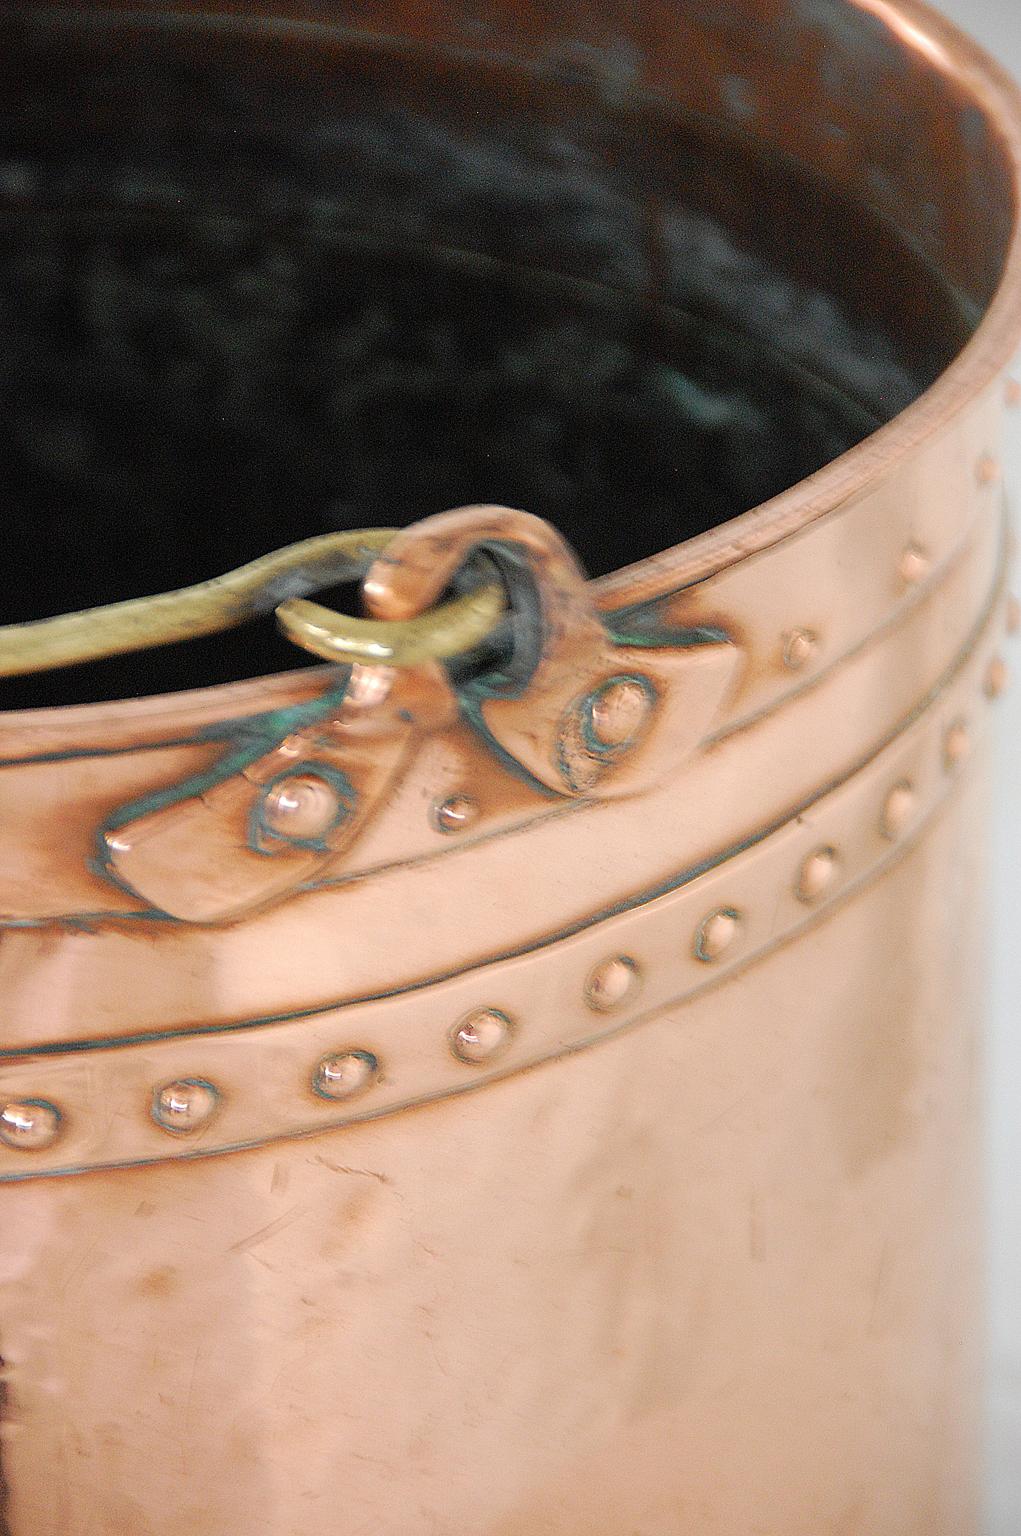 copper log bucket